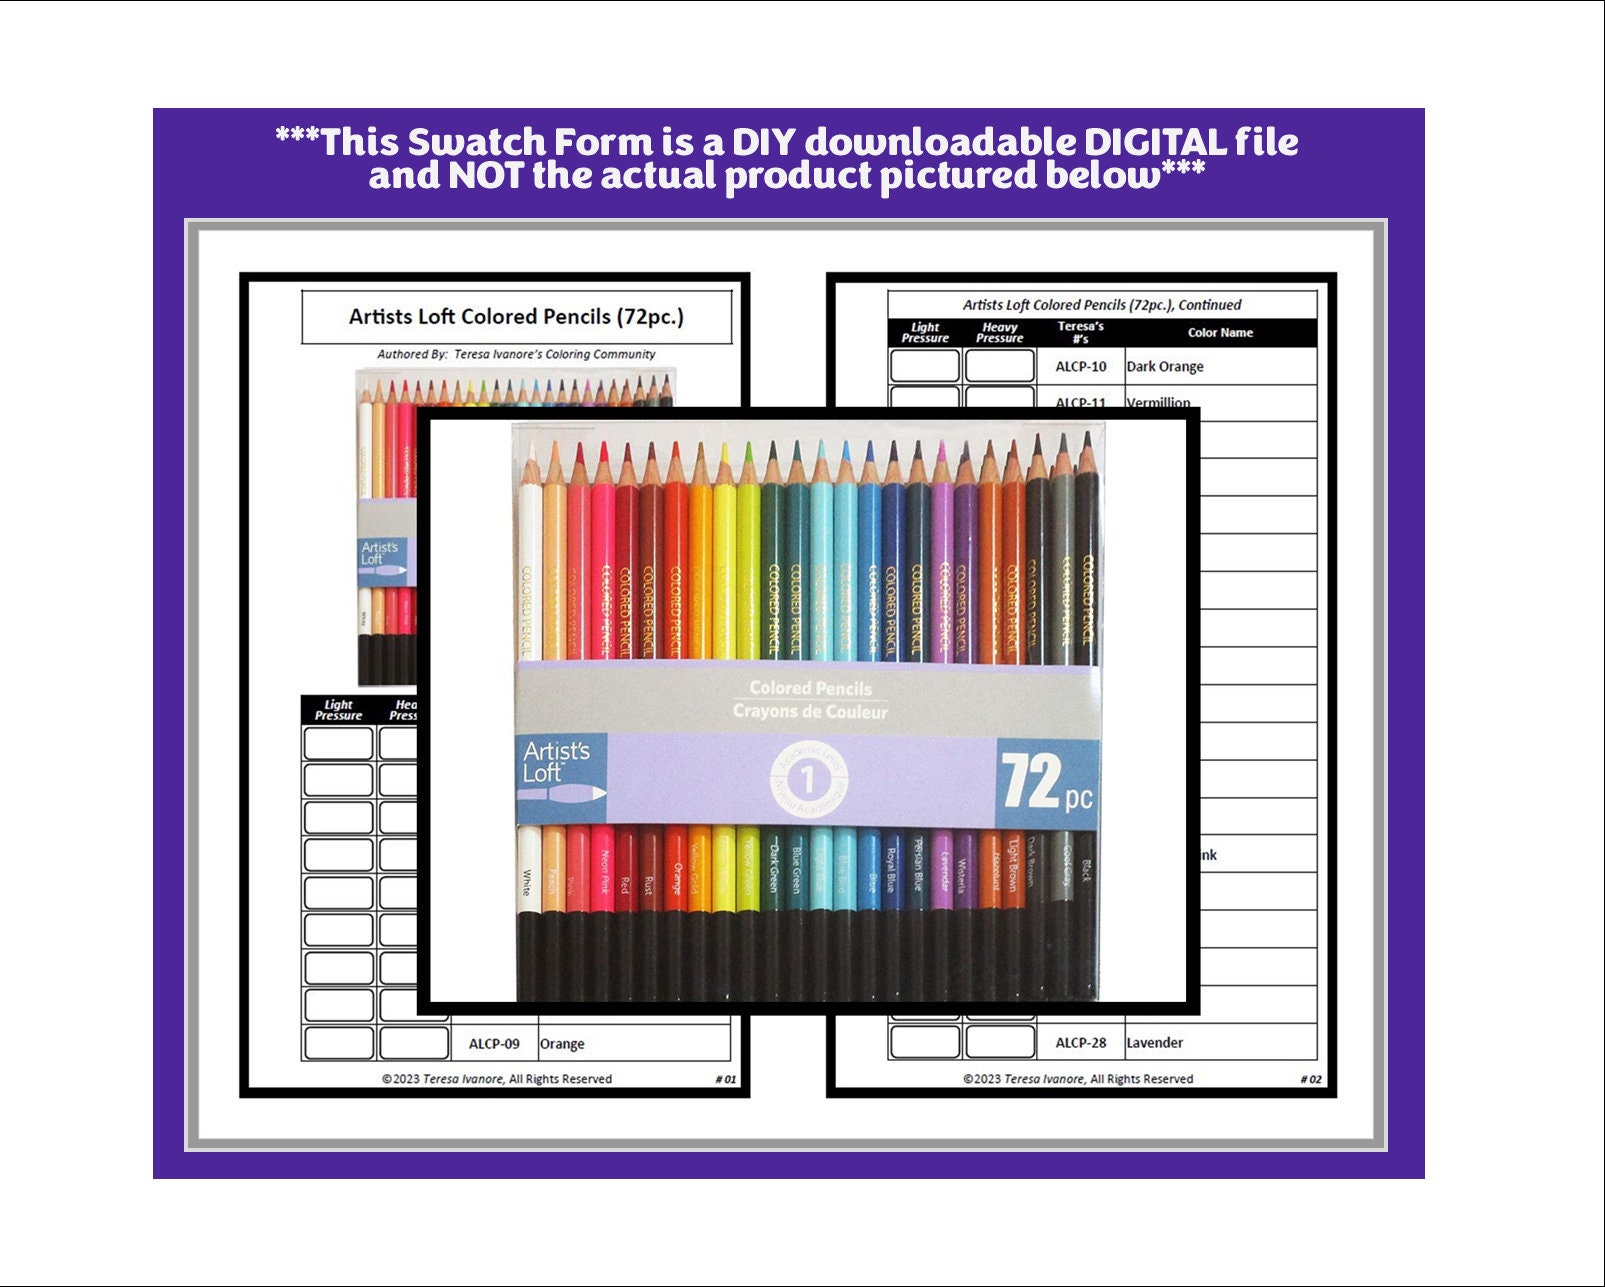 POSCA Medium PC-5M Art Paint Marker Pens Drawing Drafting Poster